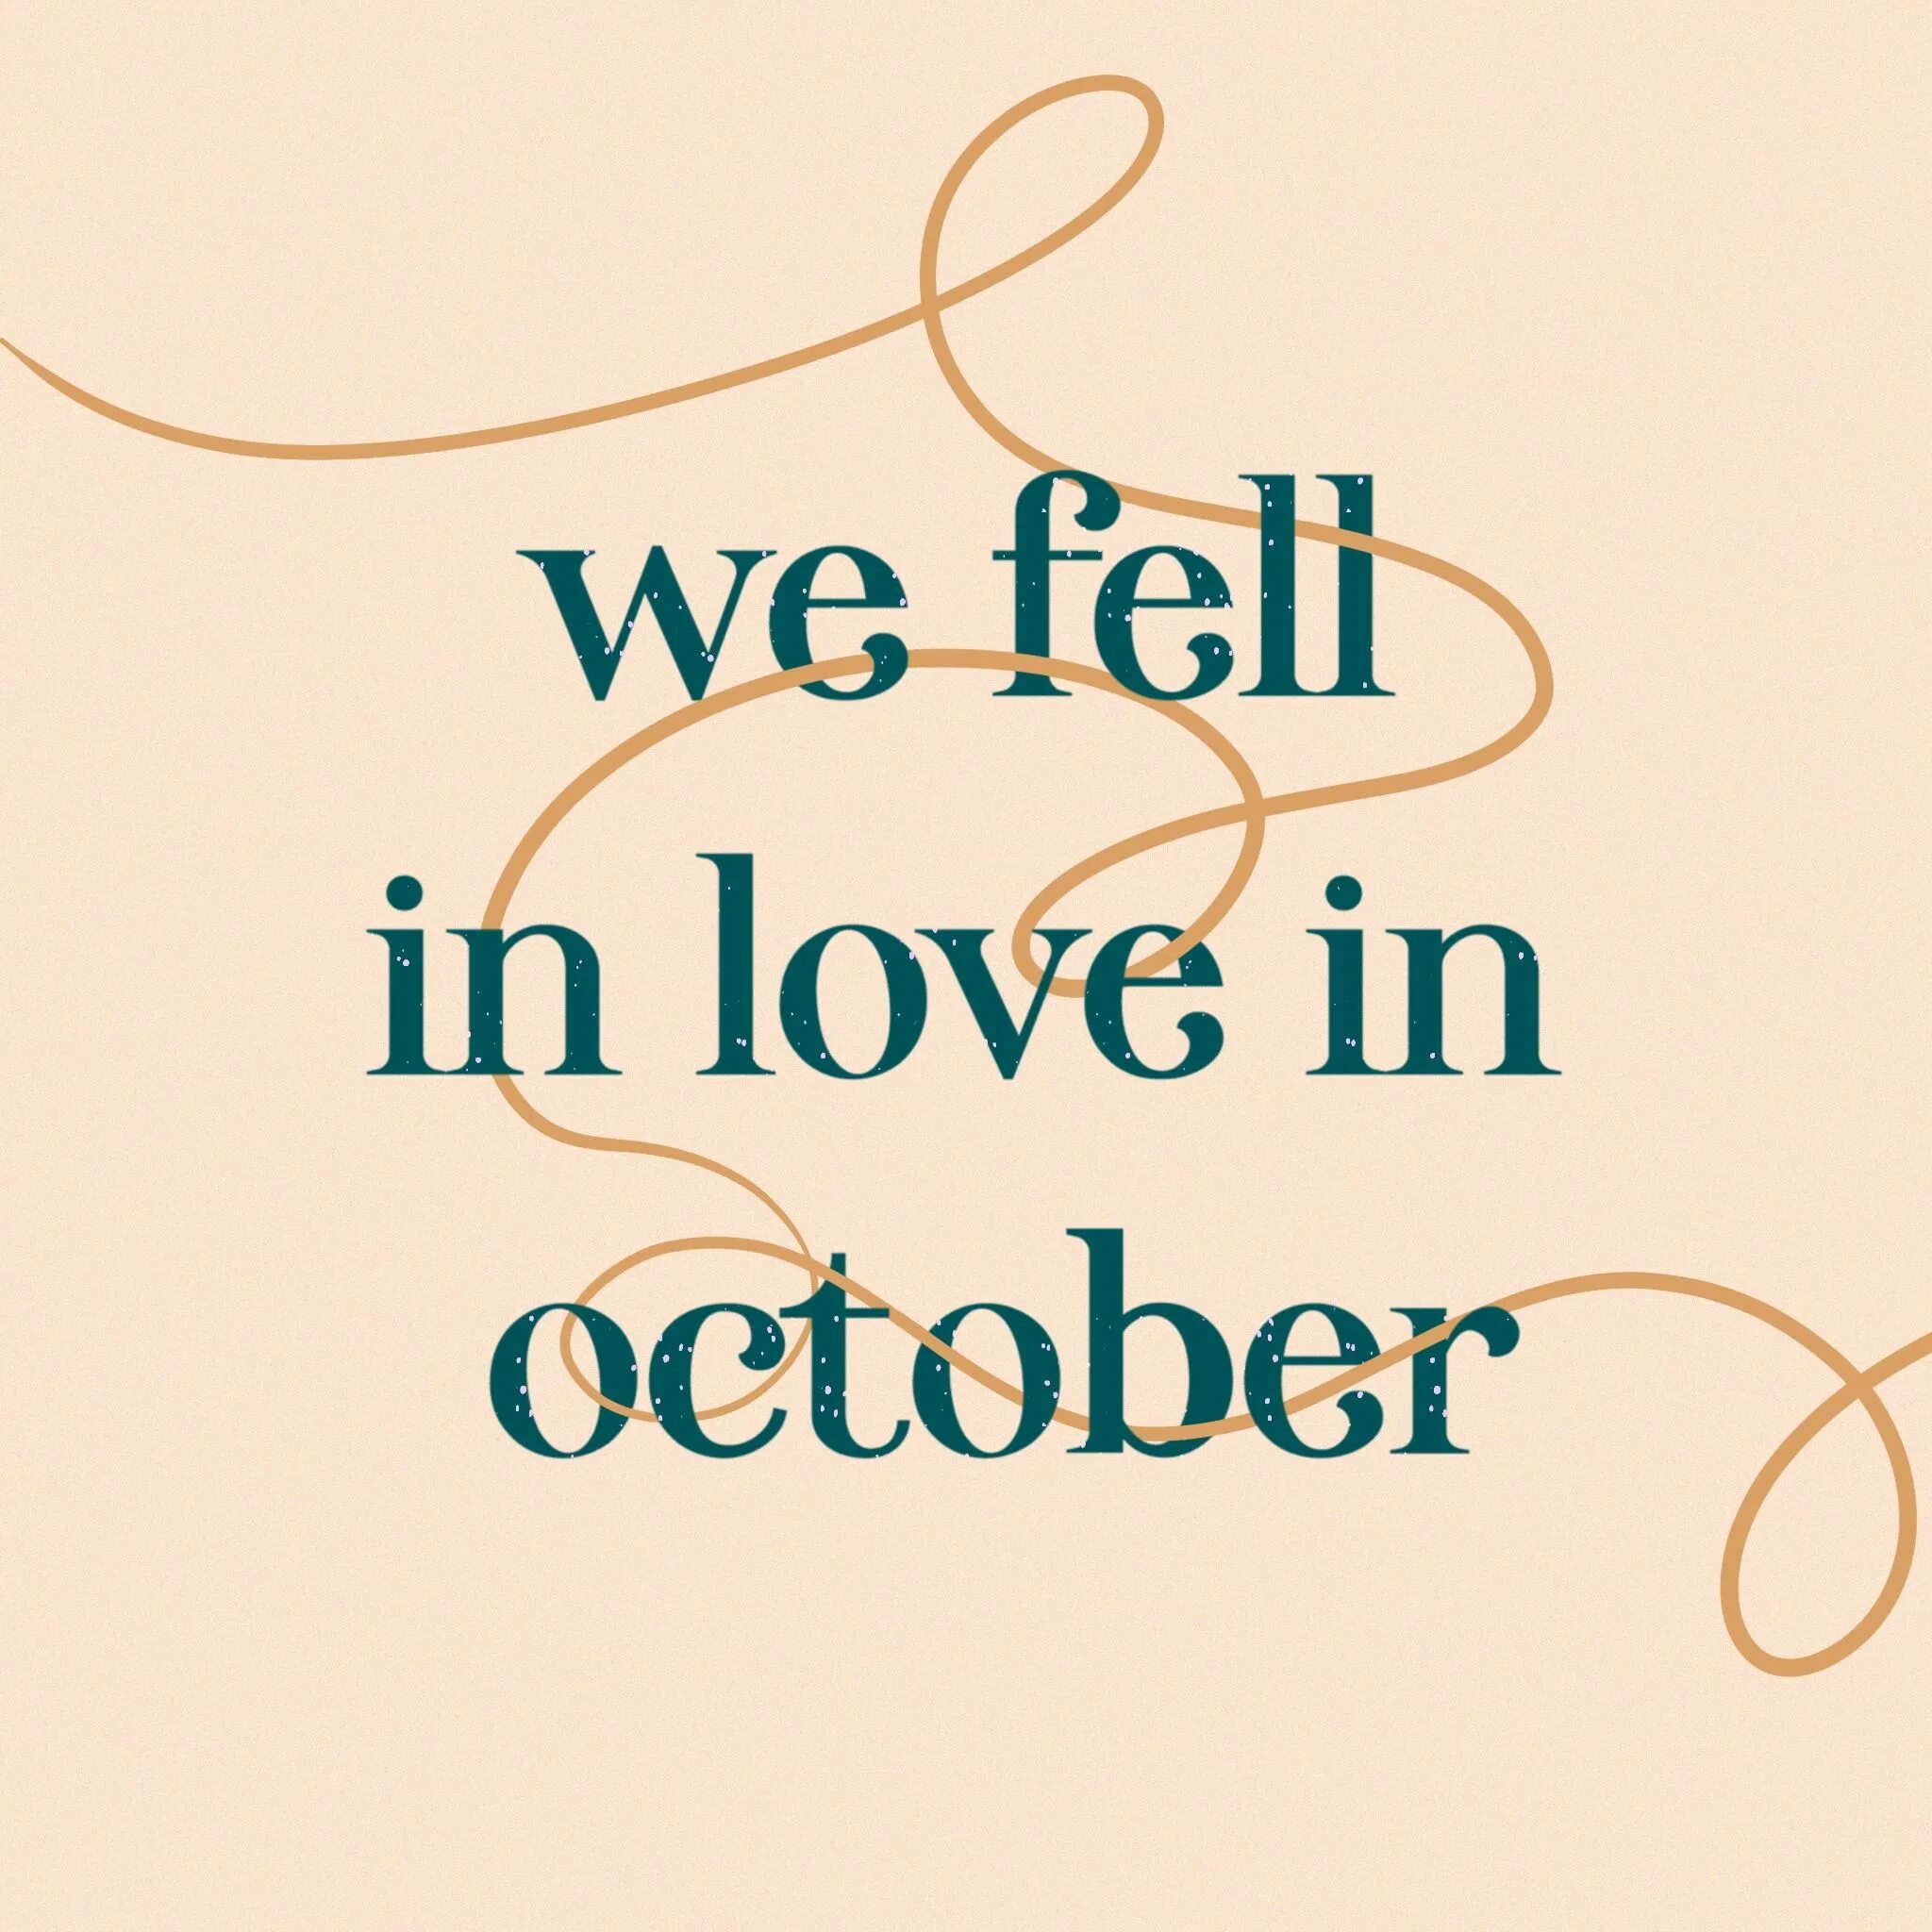 Feeling love in october. We fell in Love in October текст. We Fall in Love in October текст. Fell in Love. Girl in Red we fell in Love in October текст.